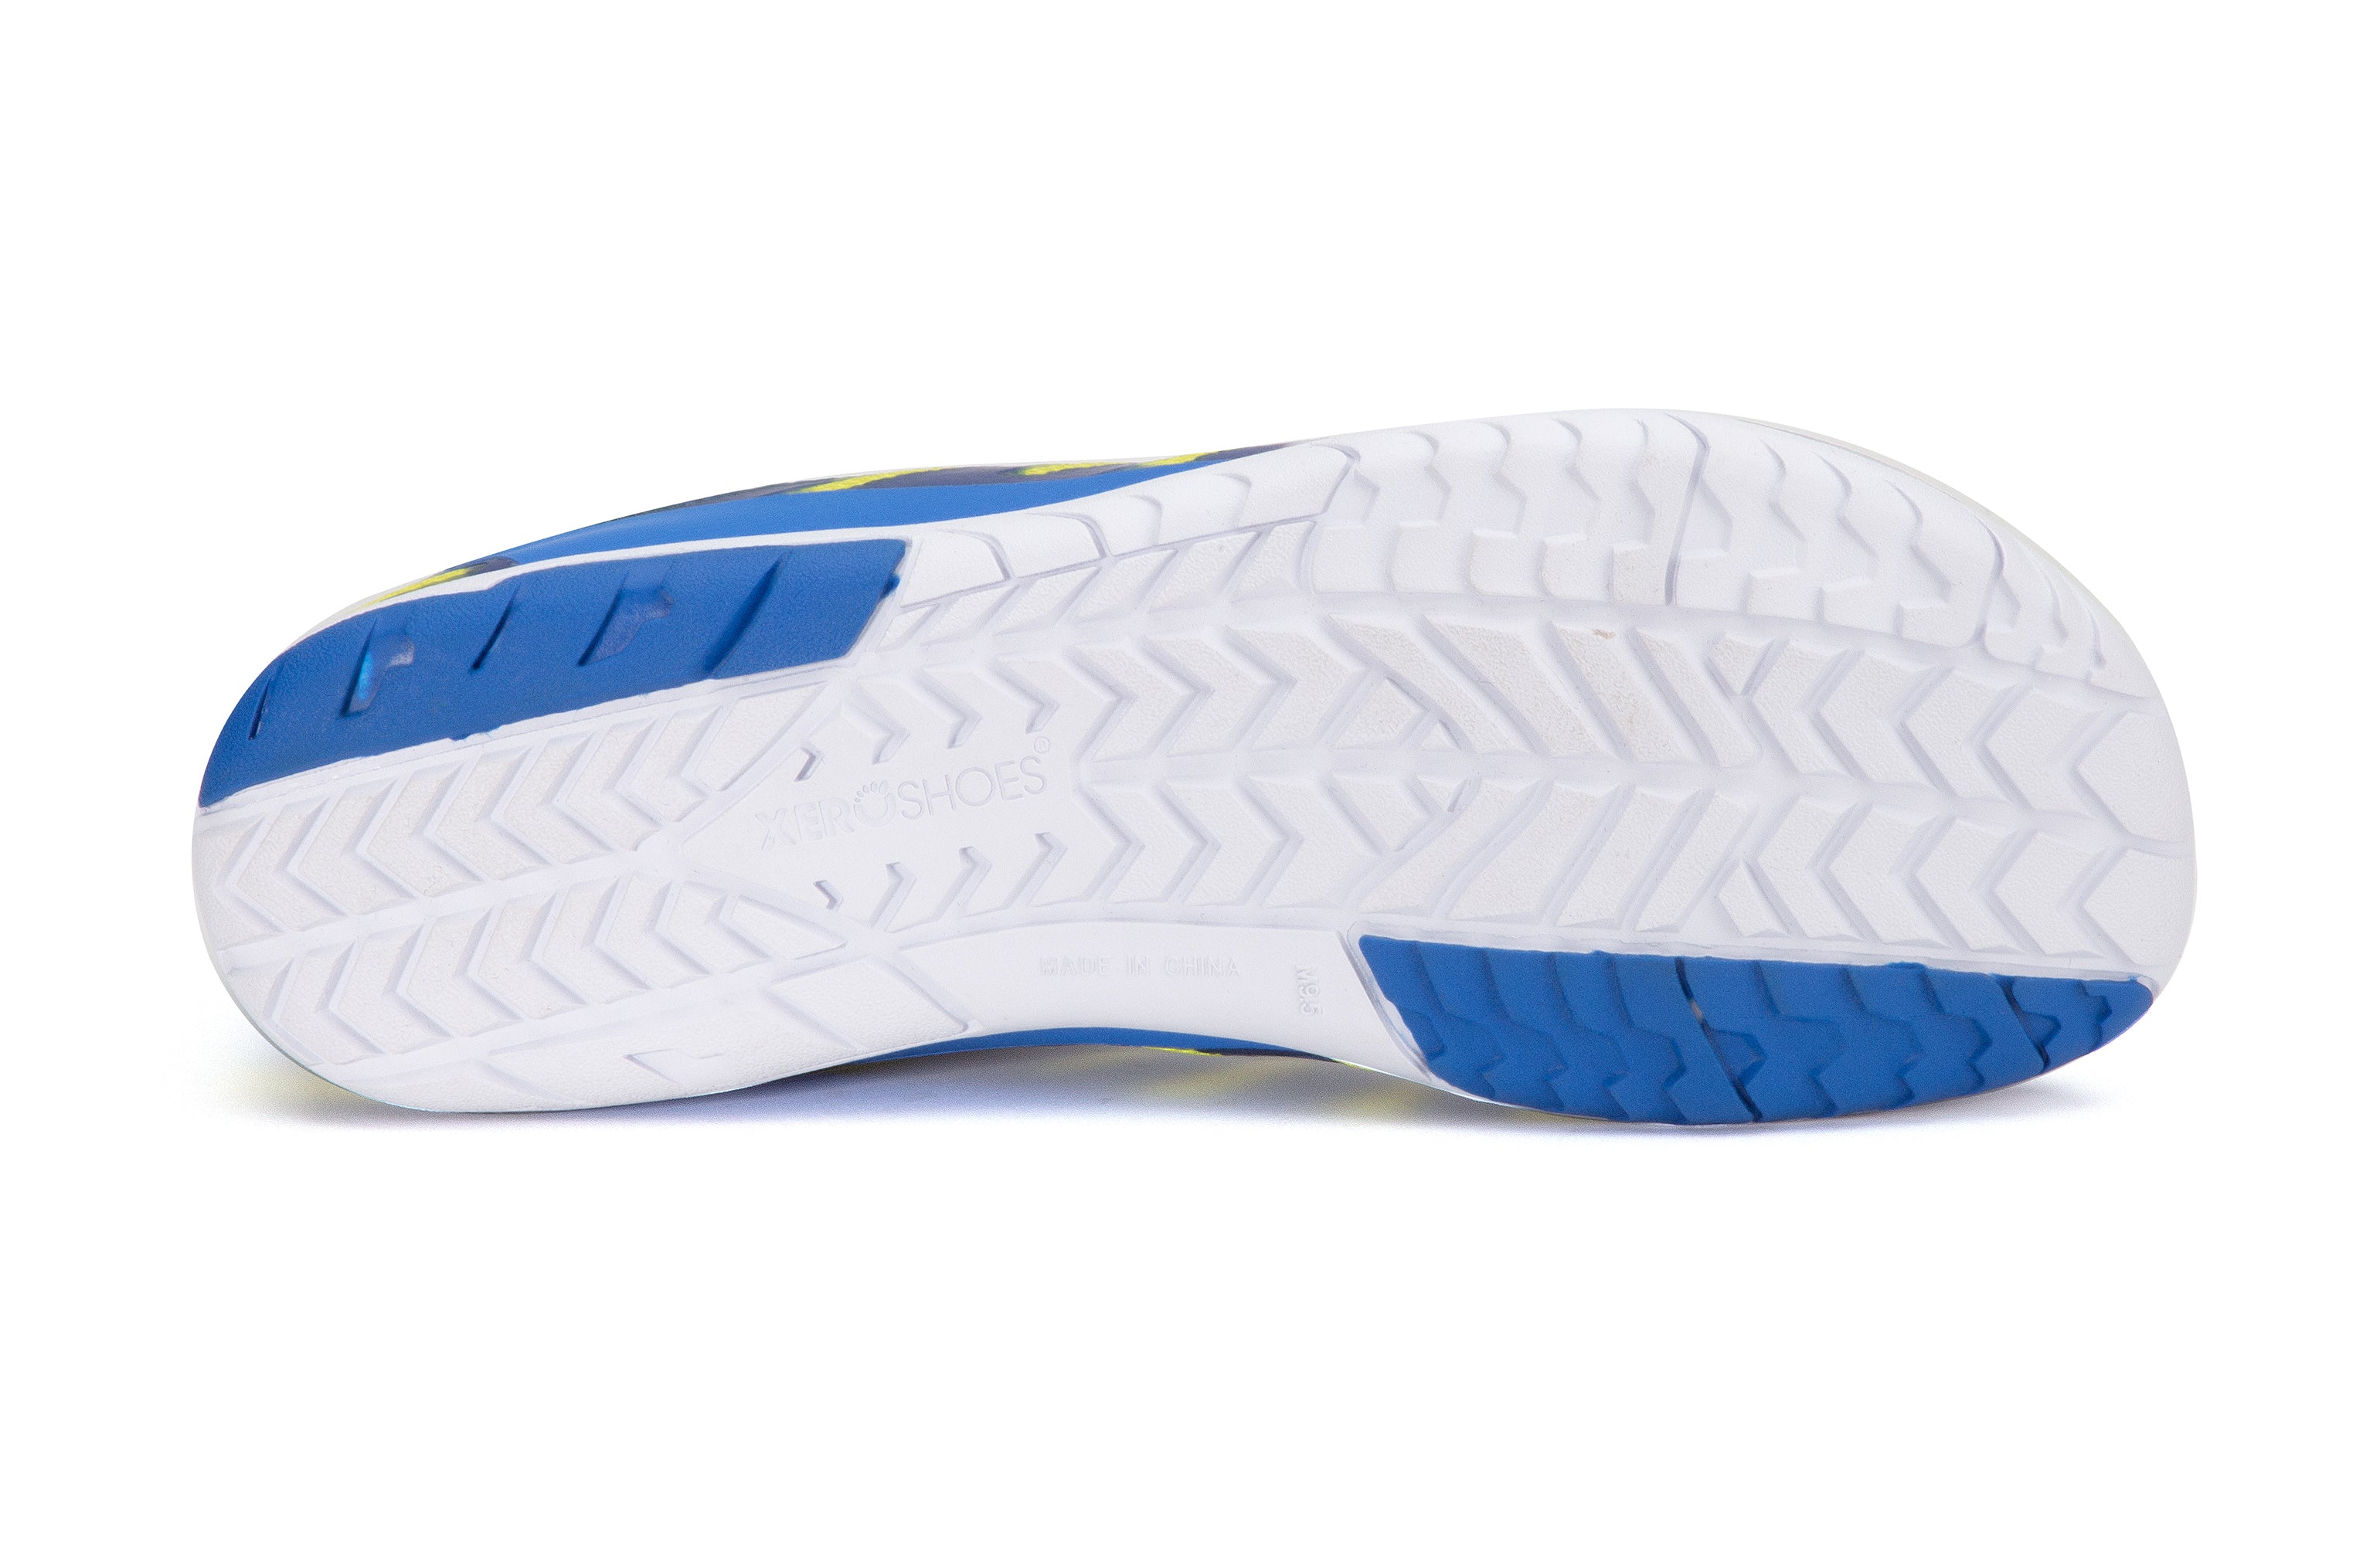 Xero Shoes Forza Runner Mens barfods løbesko til mænd i farven victory blue / sulphur, saal